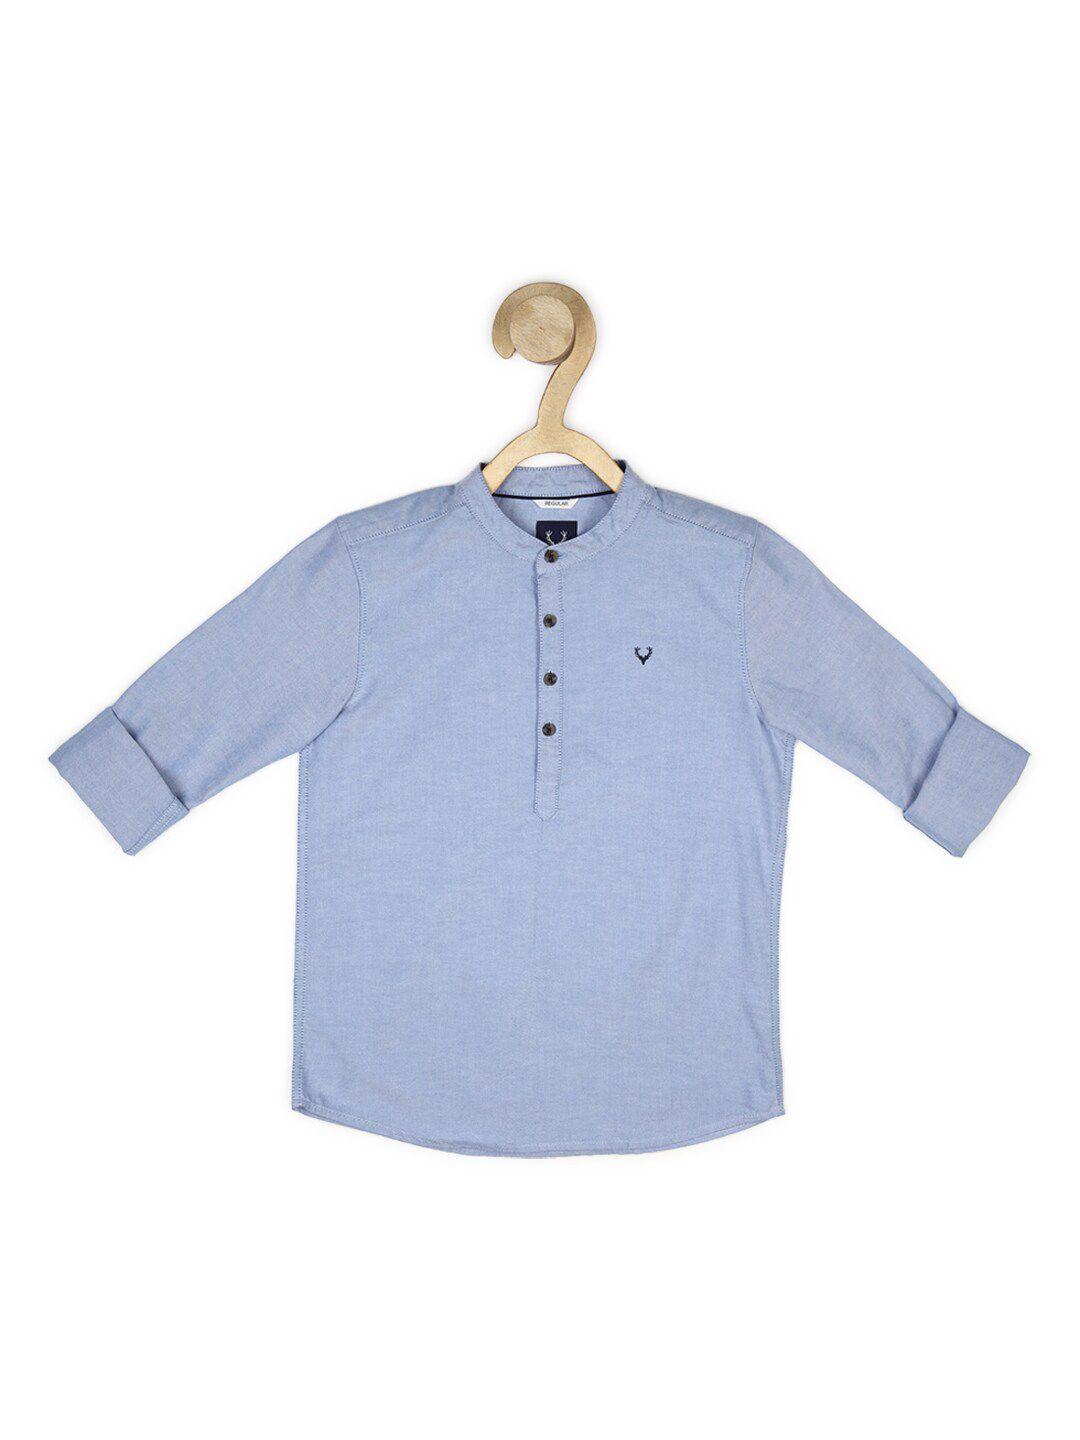 allen solly junior boys blue regular fit mandarin collar cotton casual shirt